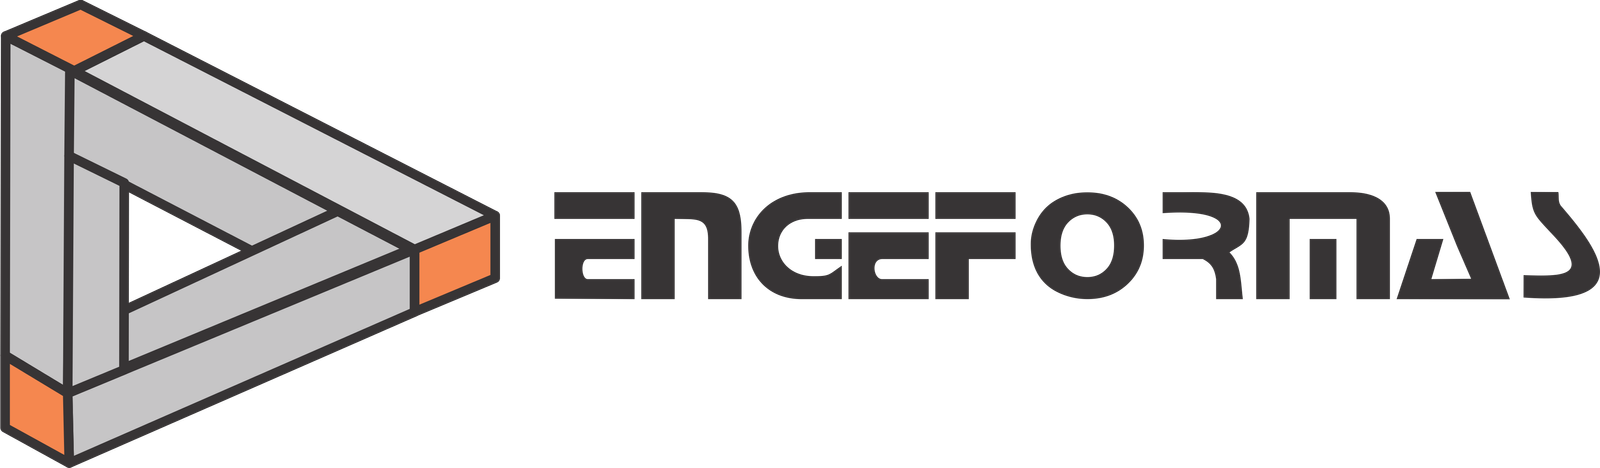 Logo Engeformas